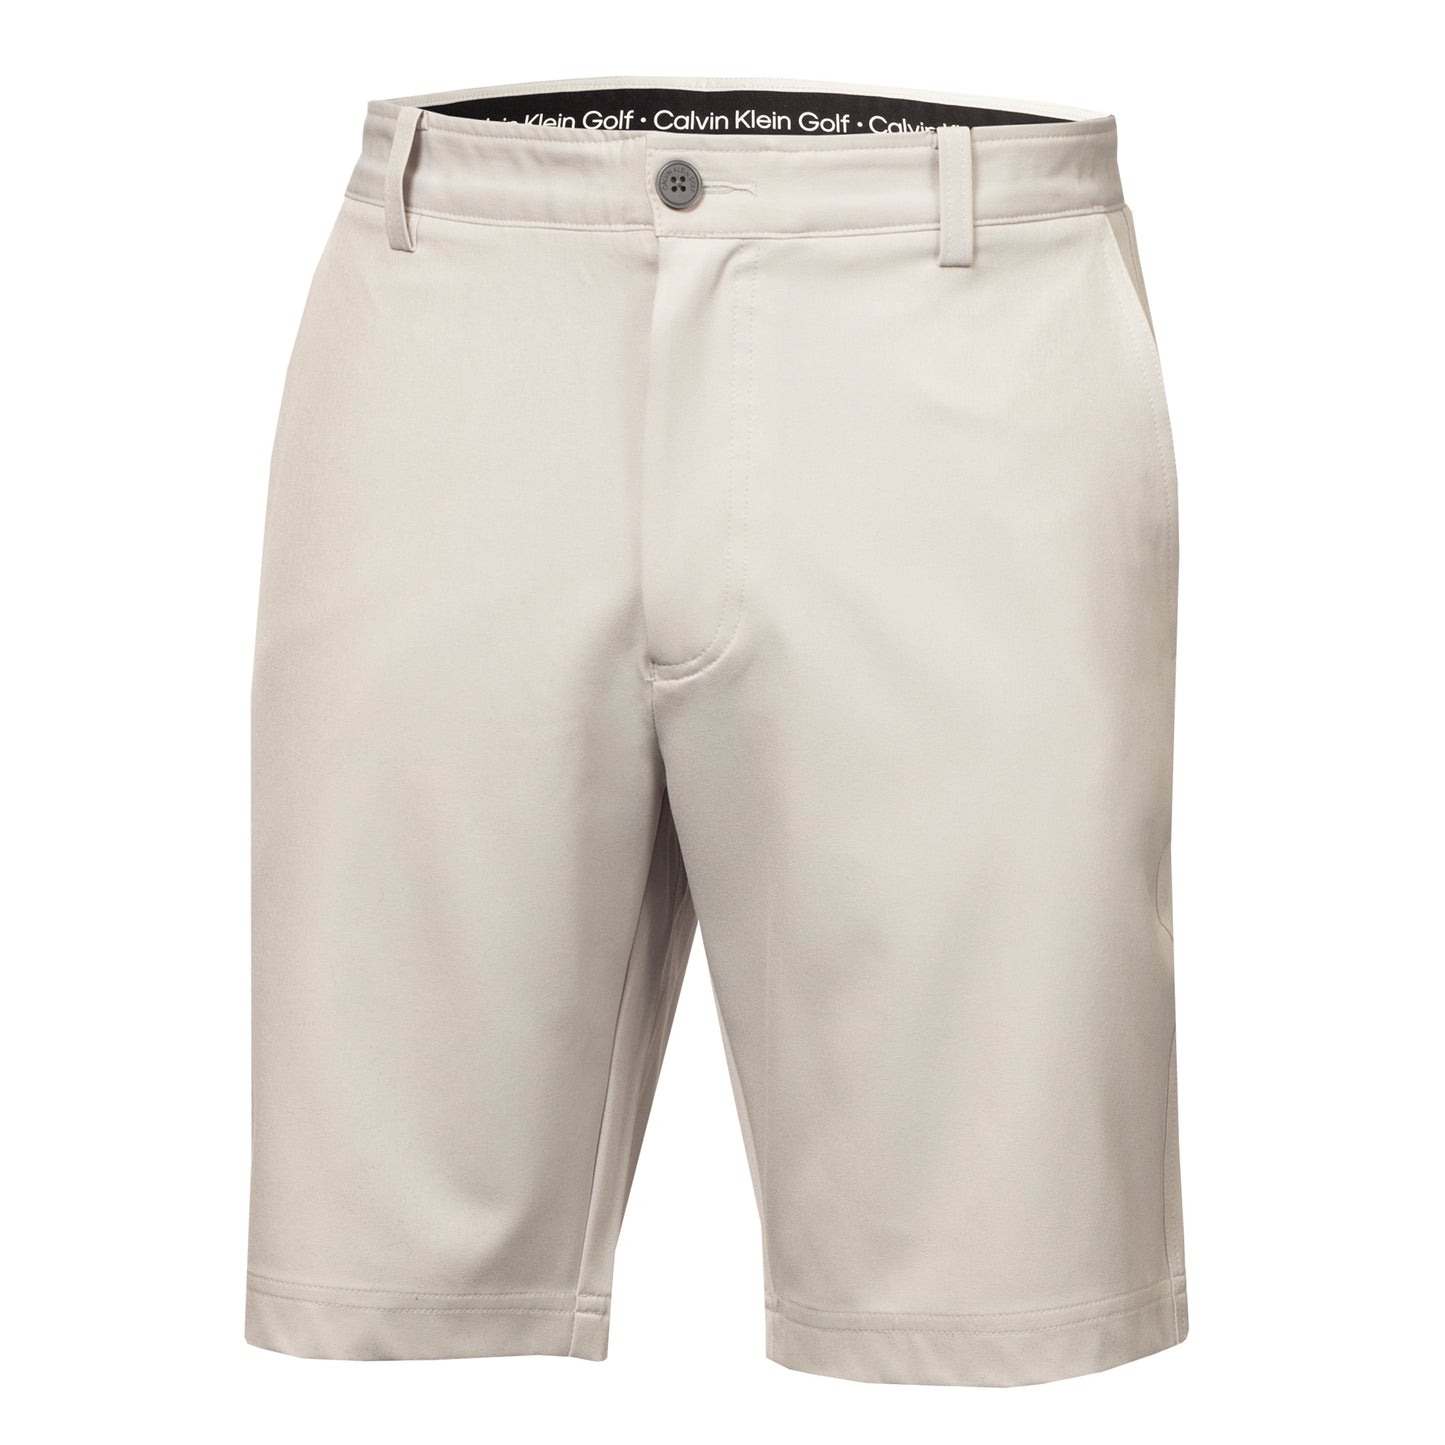 Calvin Klein Bullet Regular Fit Stretch Golf Shorts C9585 Pale Silver W30 